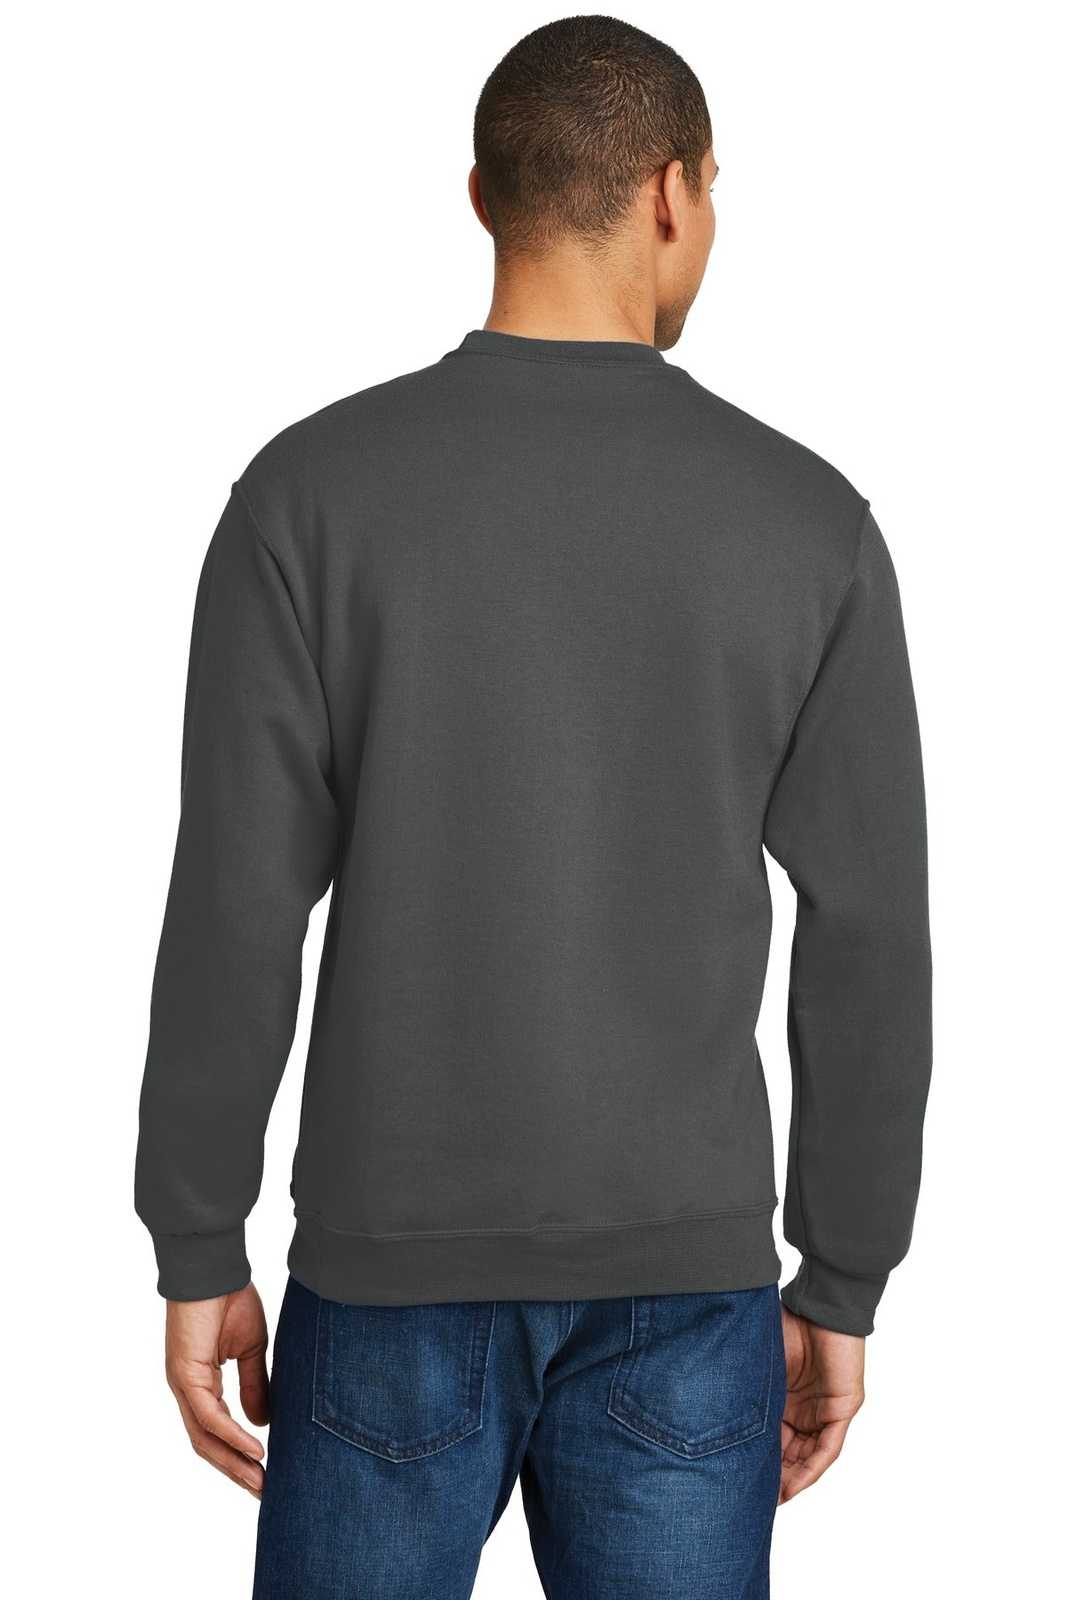 Jerzees 562M NuBlend Crewneck Sweatshirt - Charcoal Gray - HIT a Double